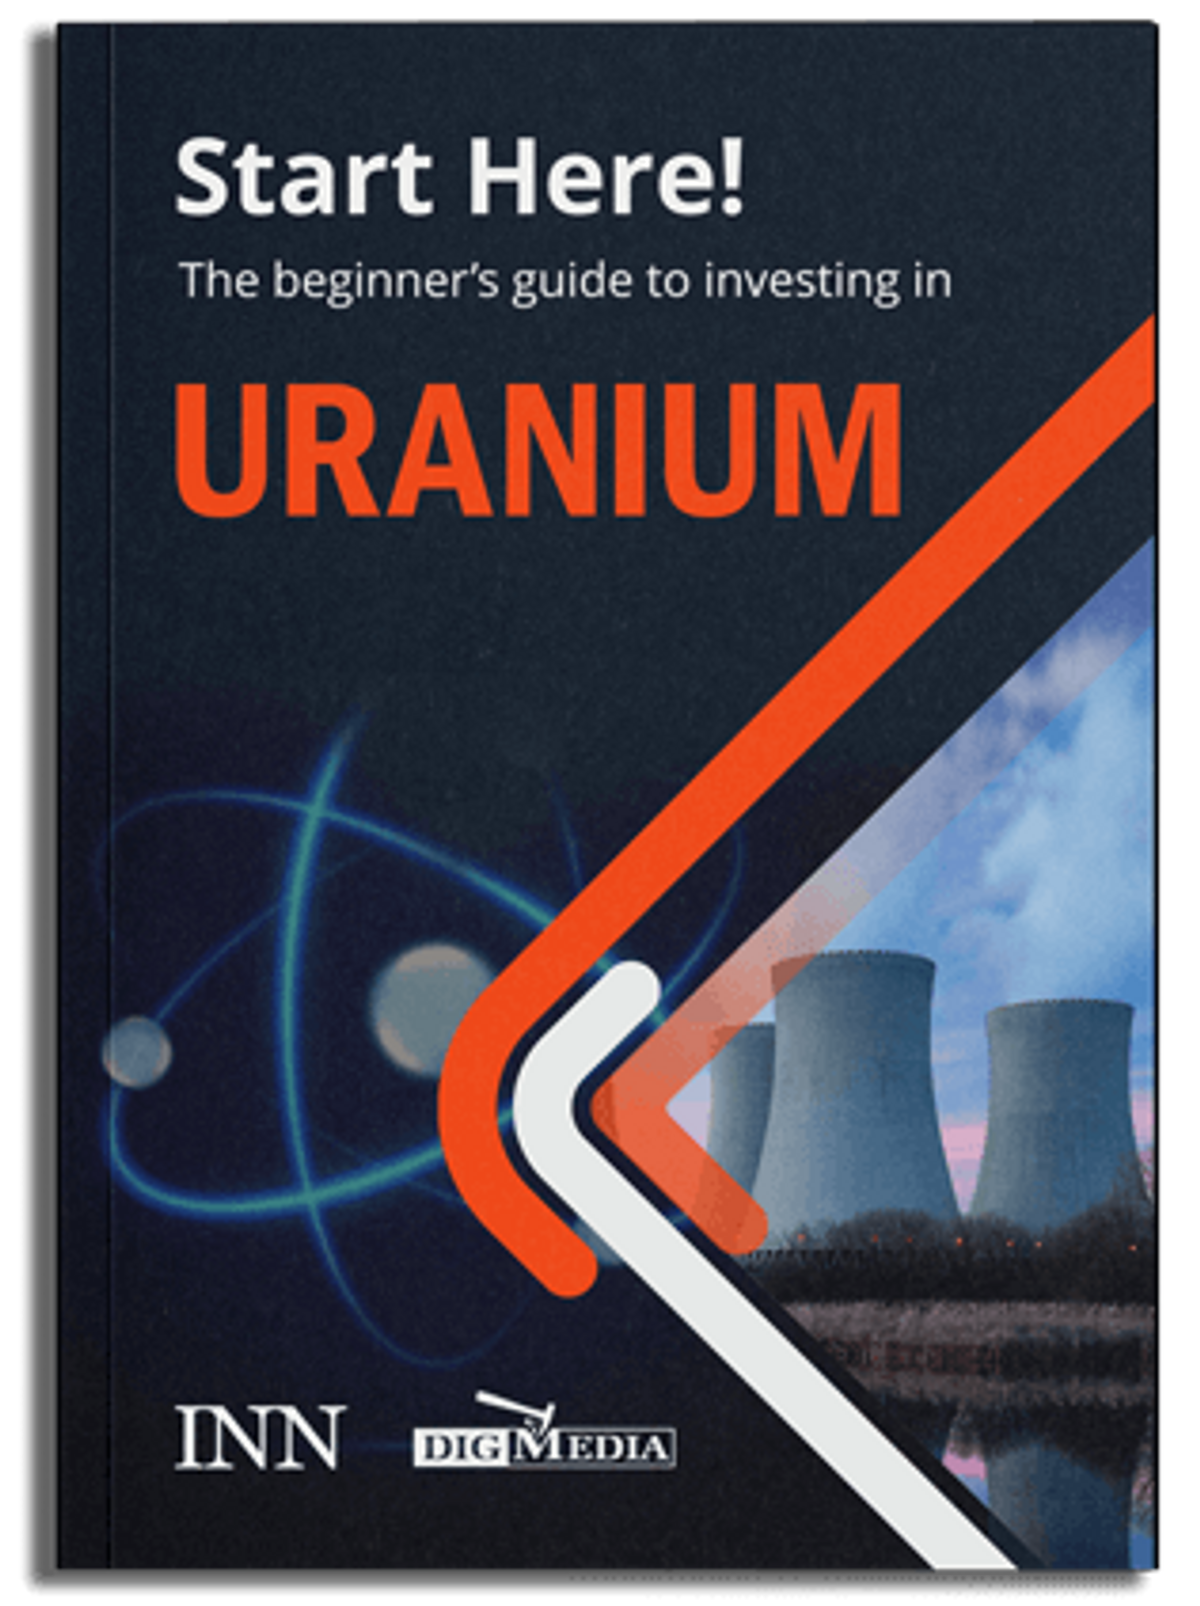 The Beginner's Guide to Investing In Uranium